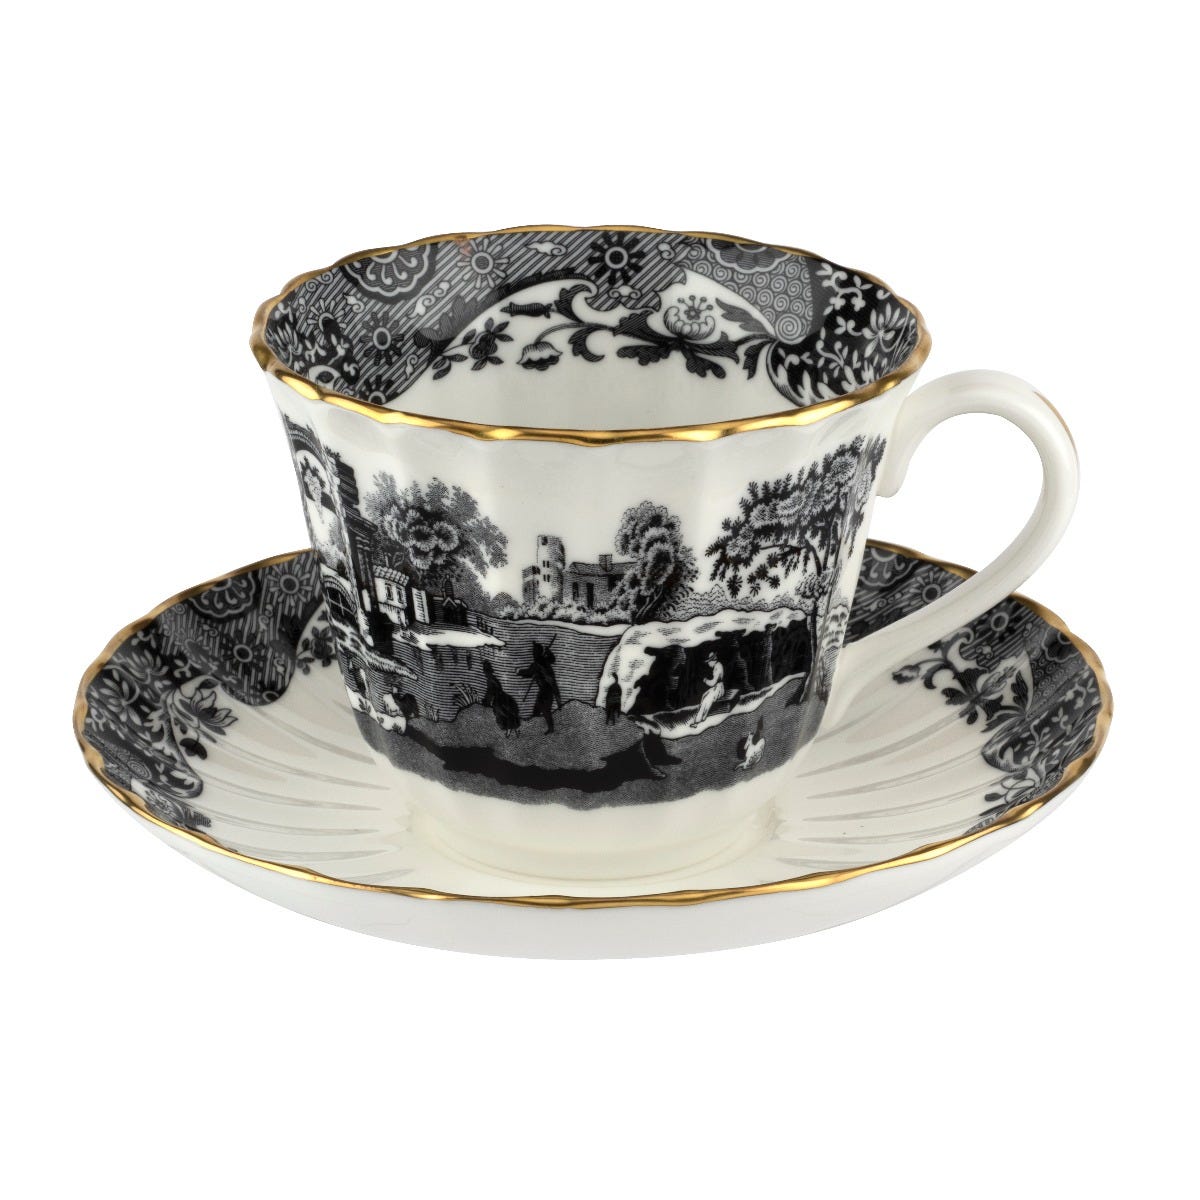 1770 Italian Teacup & Saucer in Black, Spode